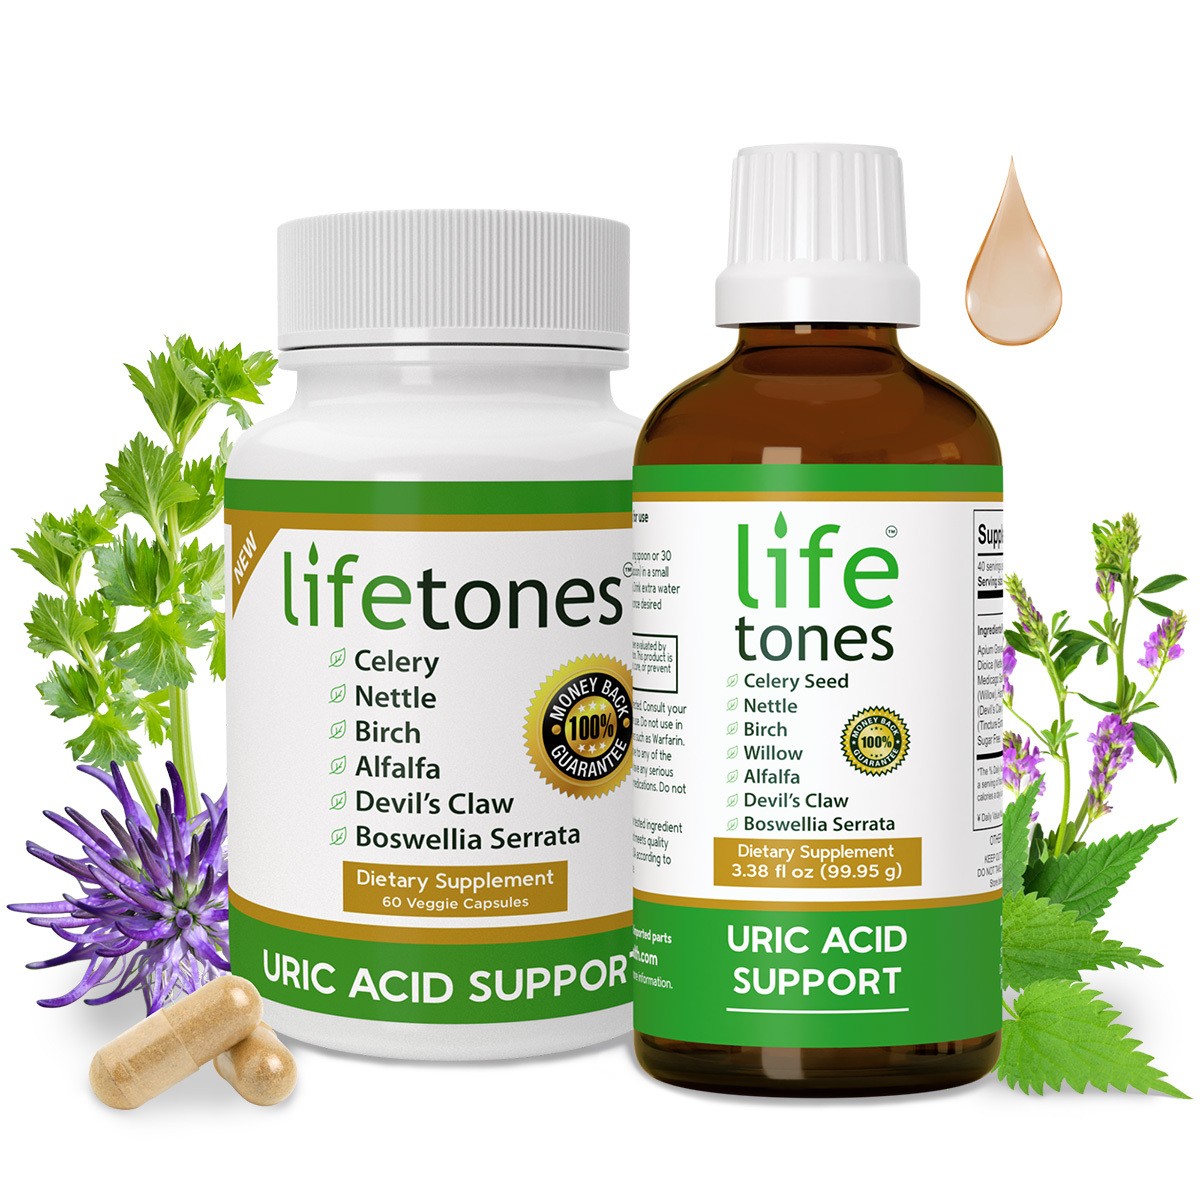 Lifetones Uric Acid Support Bundle